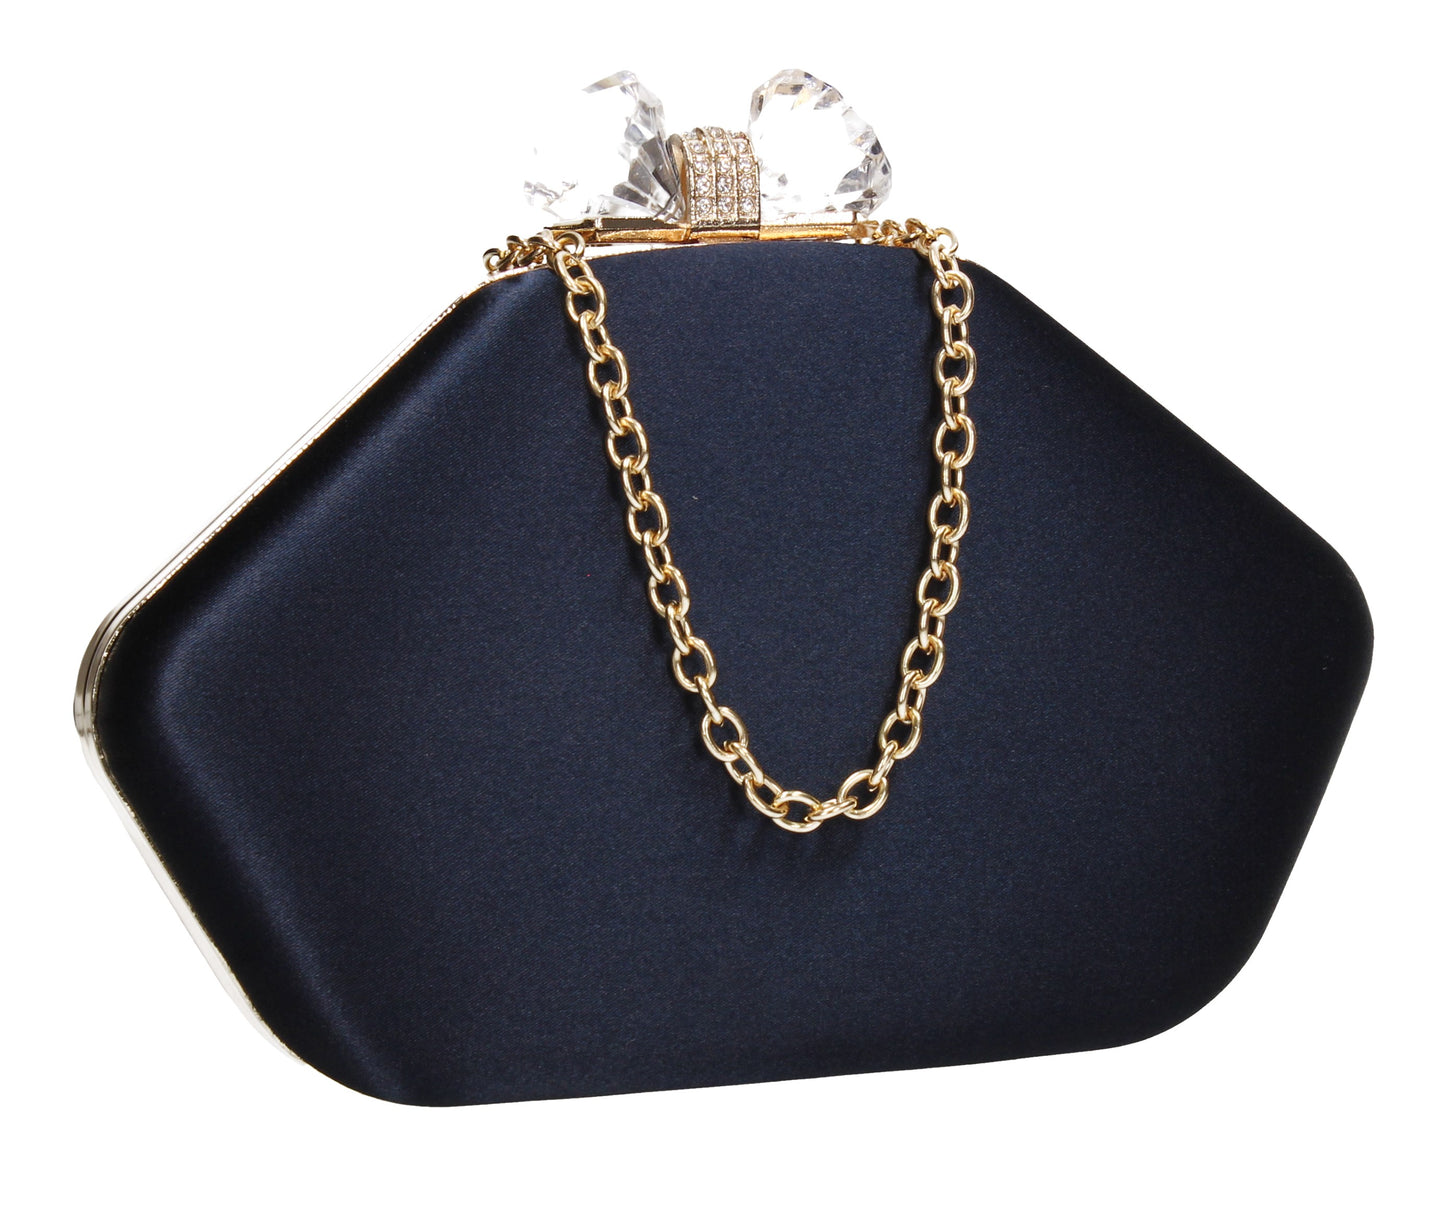 SWANKYSWANS Karie Clutch Bag Navy Blue Cute Cheap Clutch Bag For Weddings School and Work